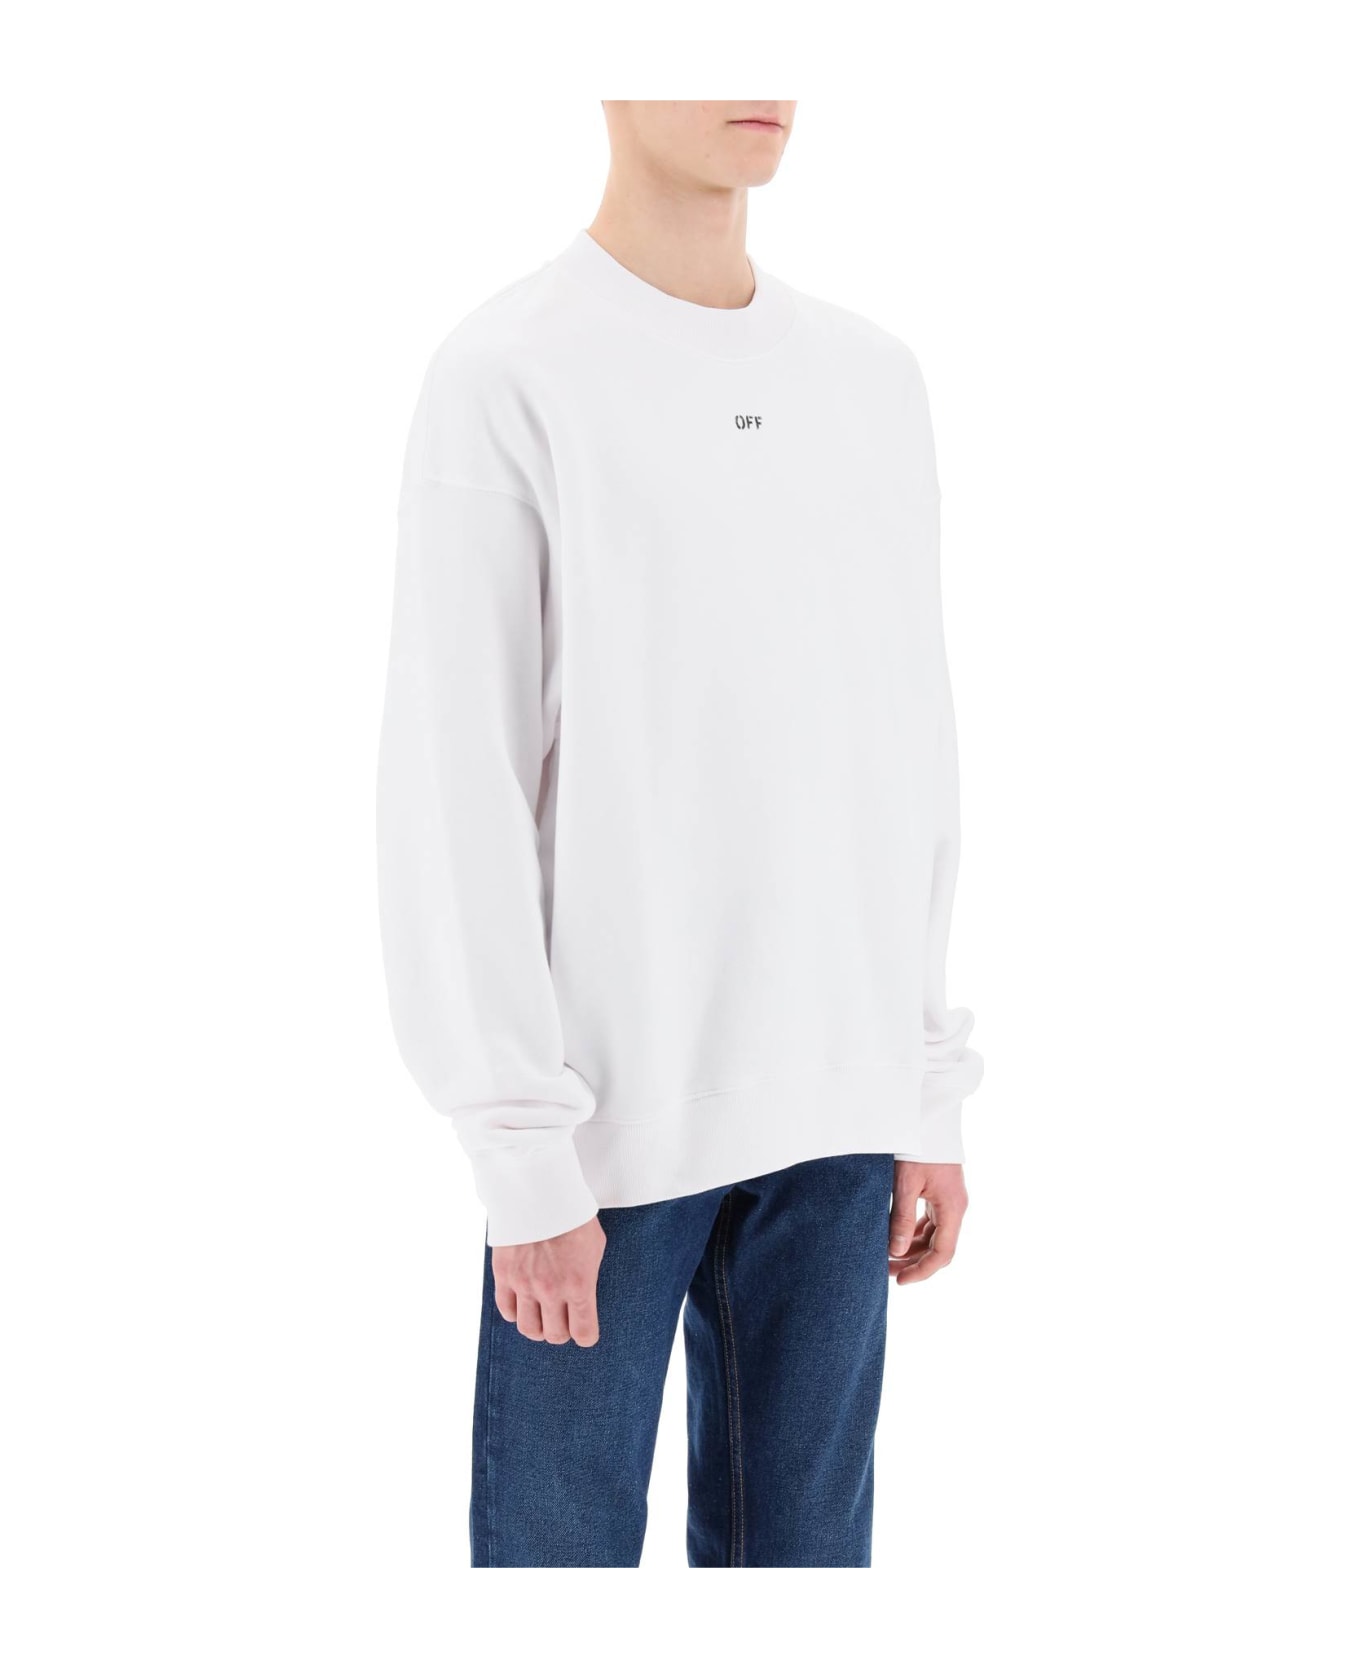 Off-White Skate Sweatshirt With Off Logo - White Black フリース